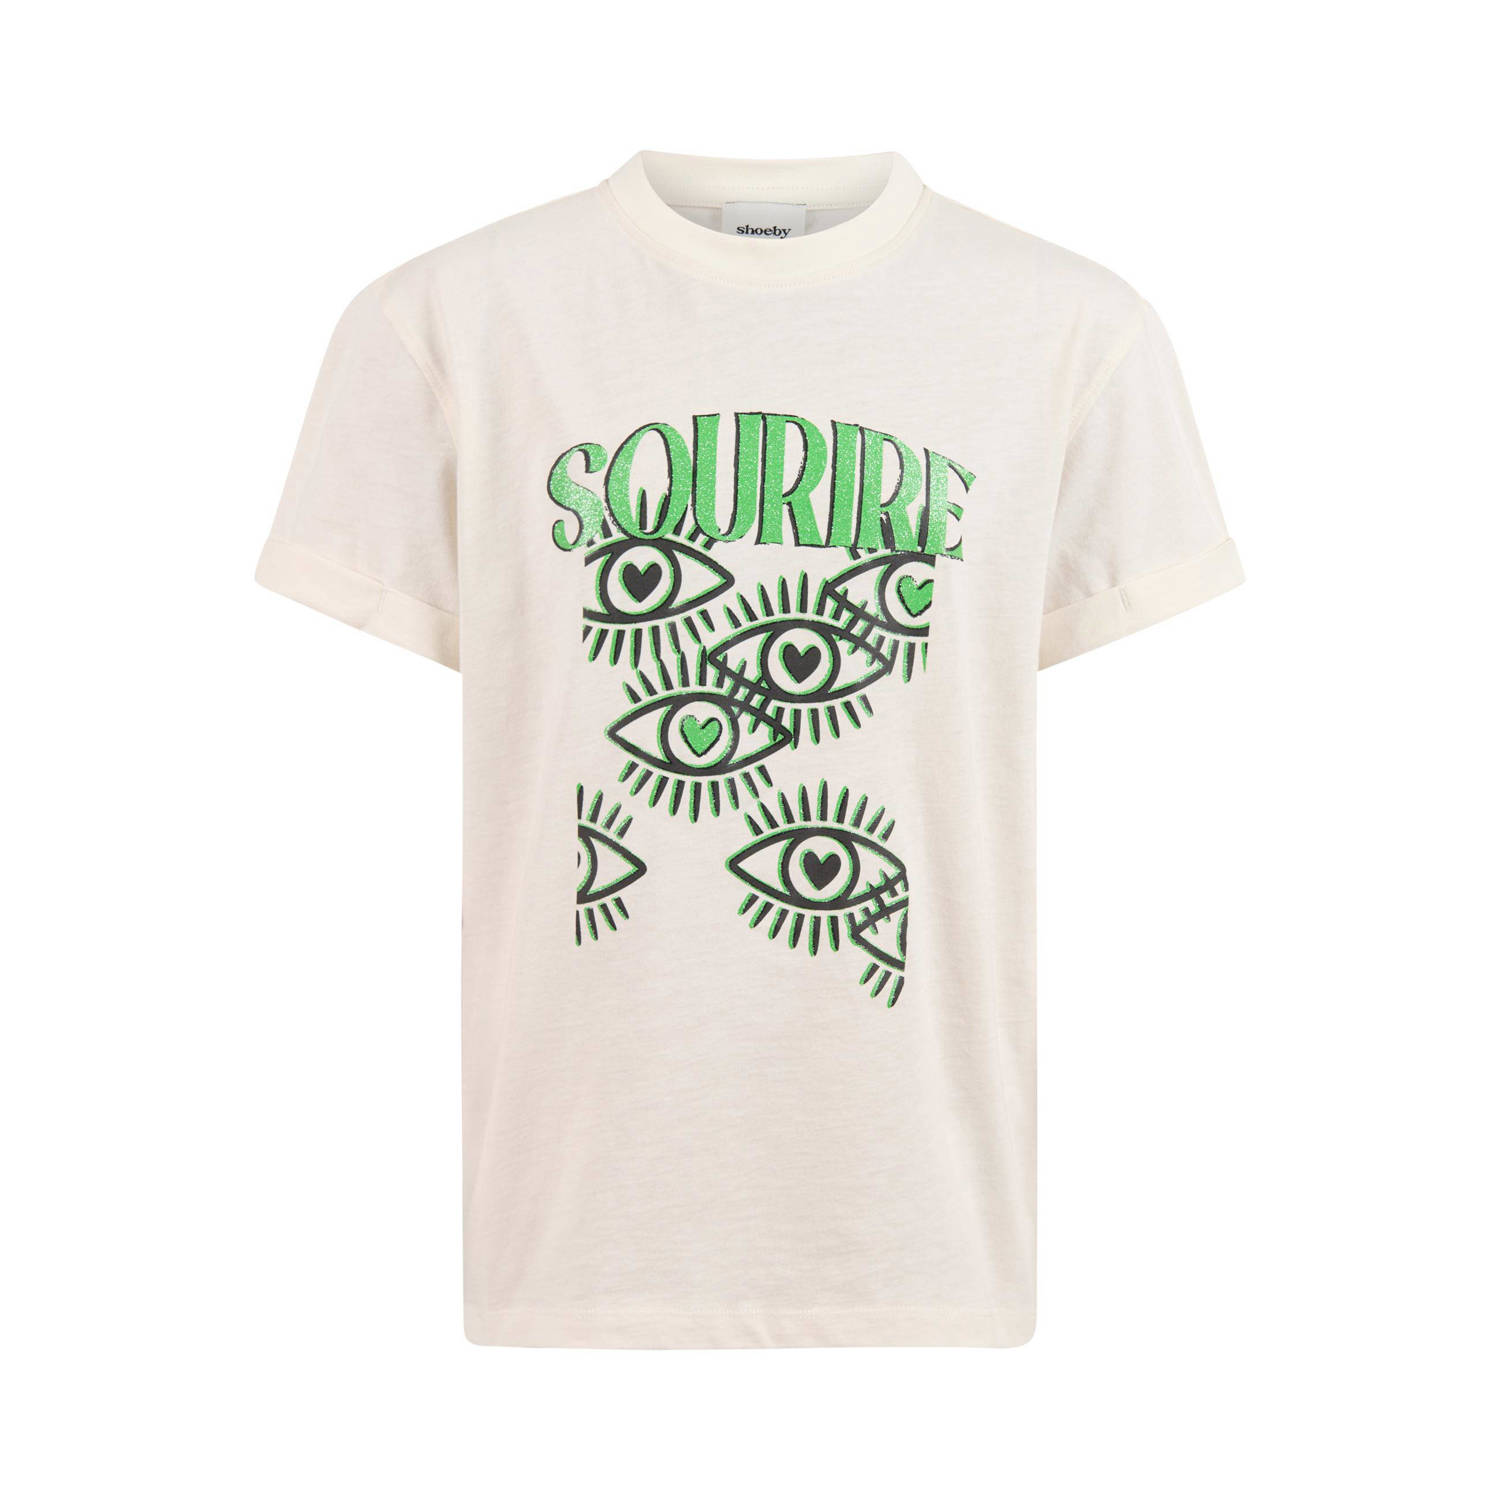 Shoeby T-shirt met printopdruk offwhite groen zwart